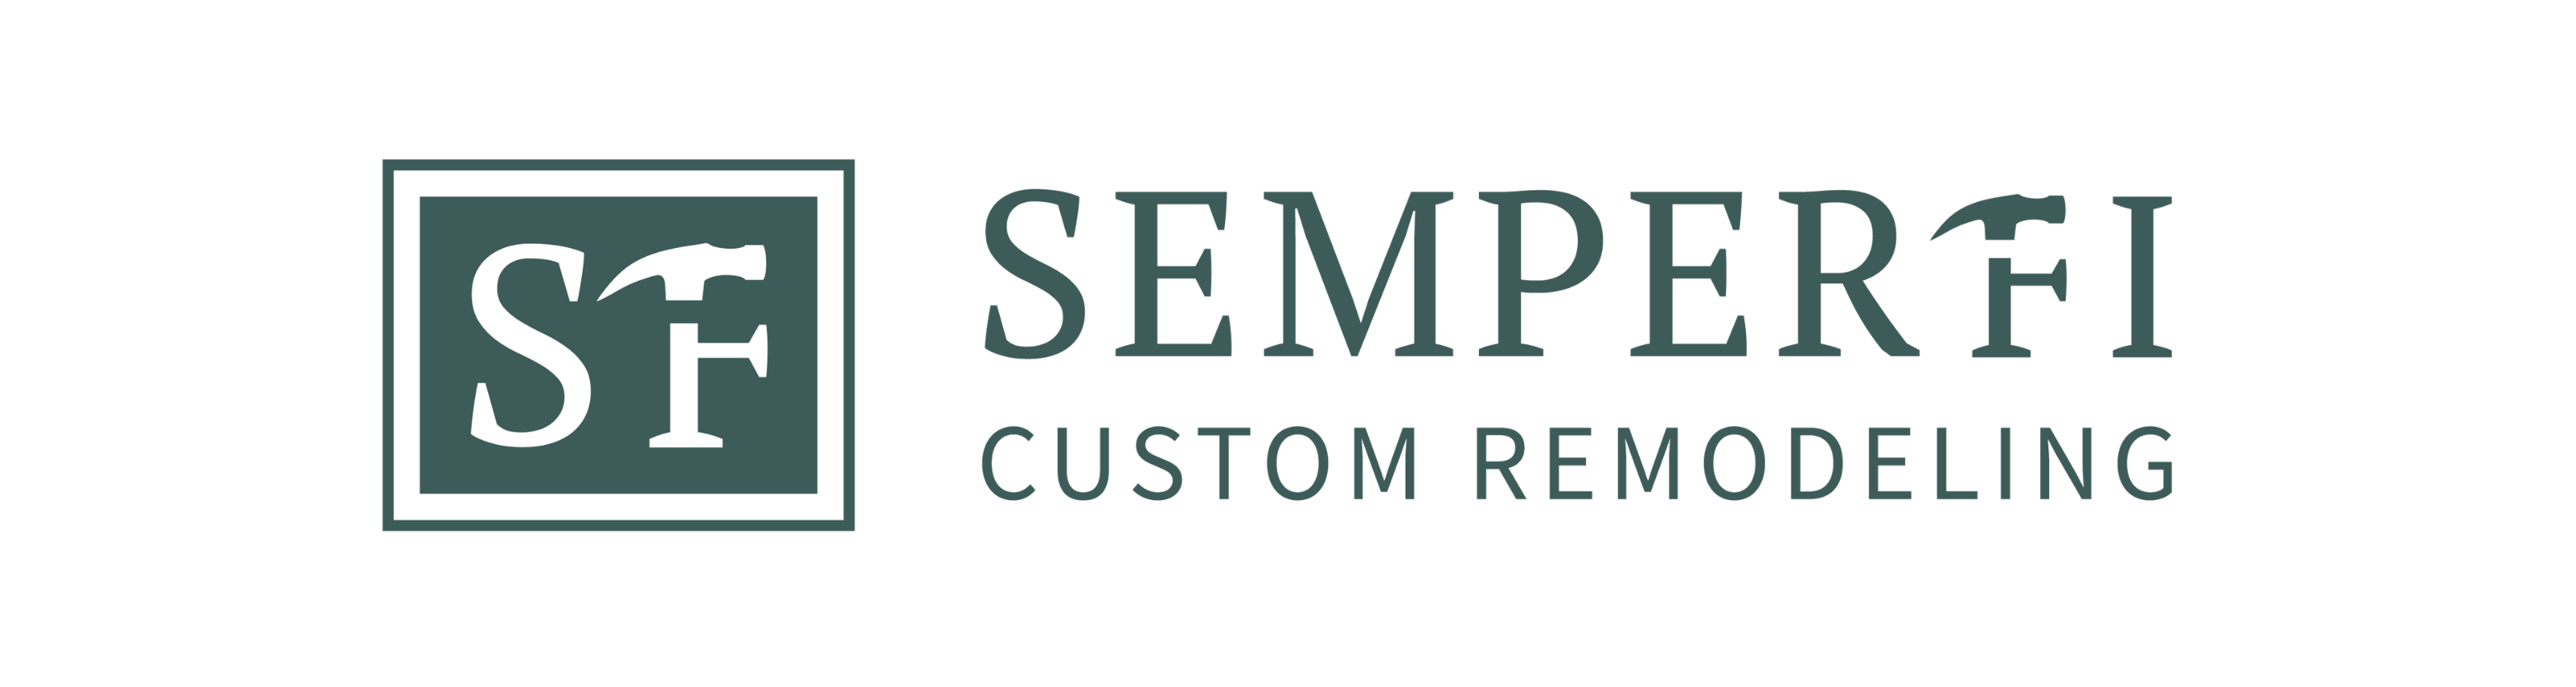 Semper Fi Custom Remodeling